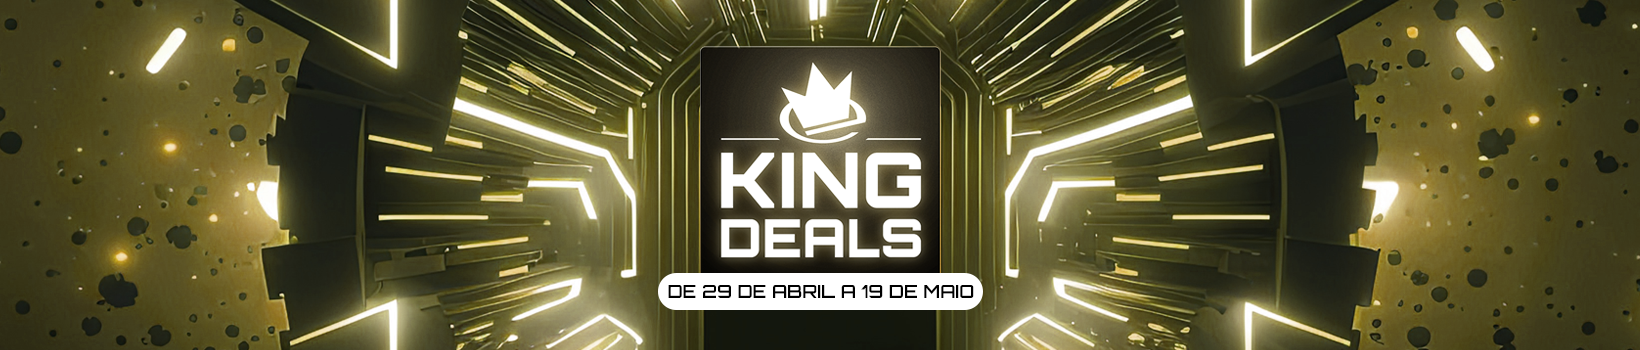 Campanha King Deals